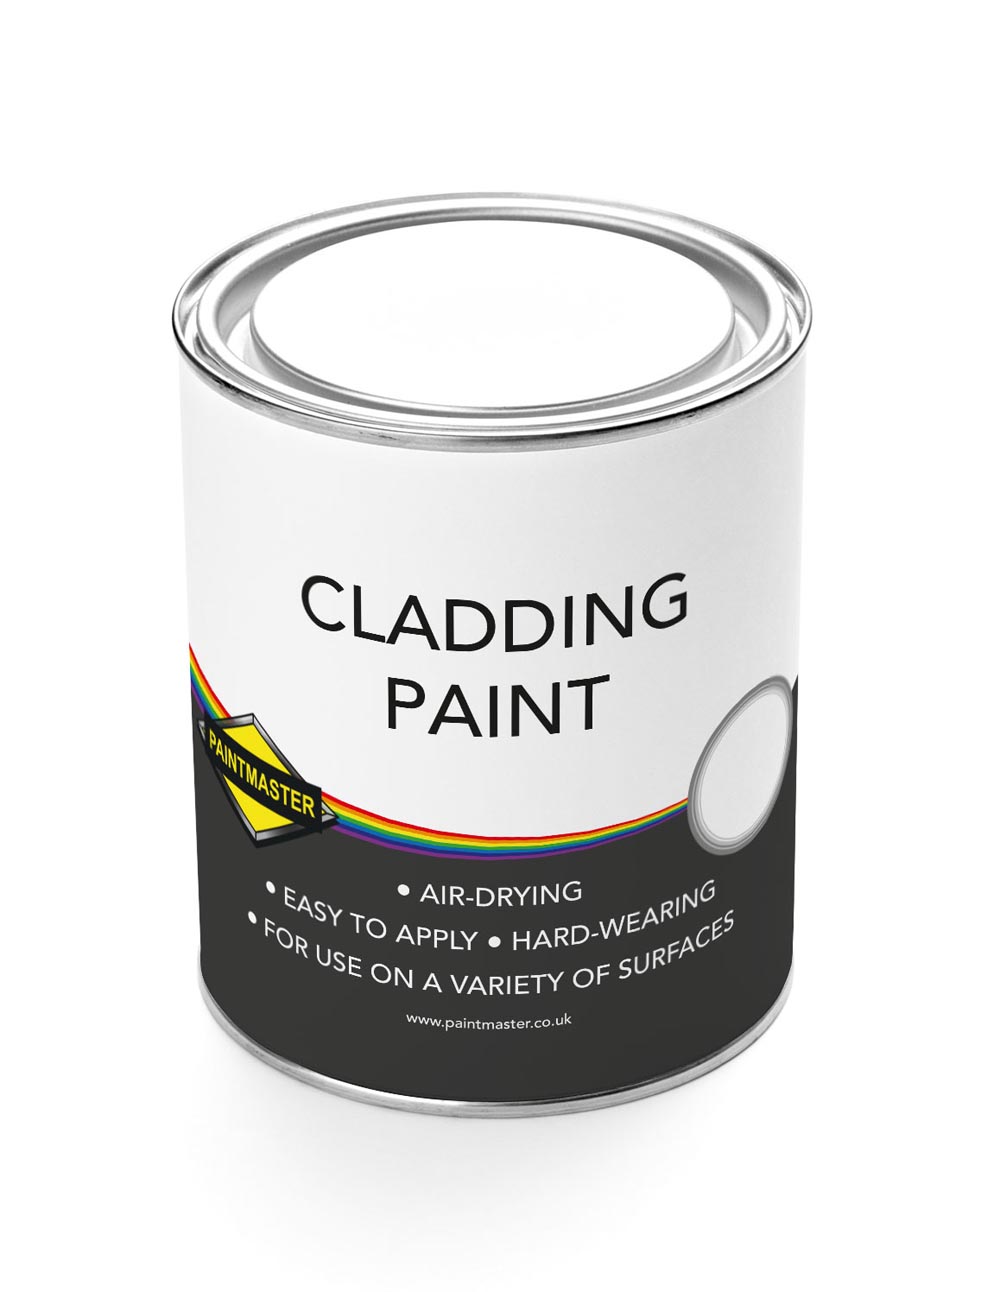 Cladding Paint - Paintmaster